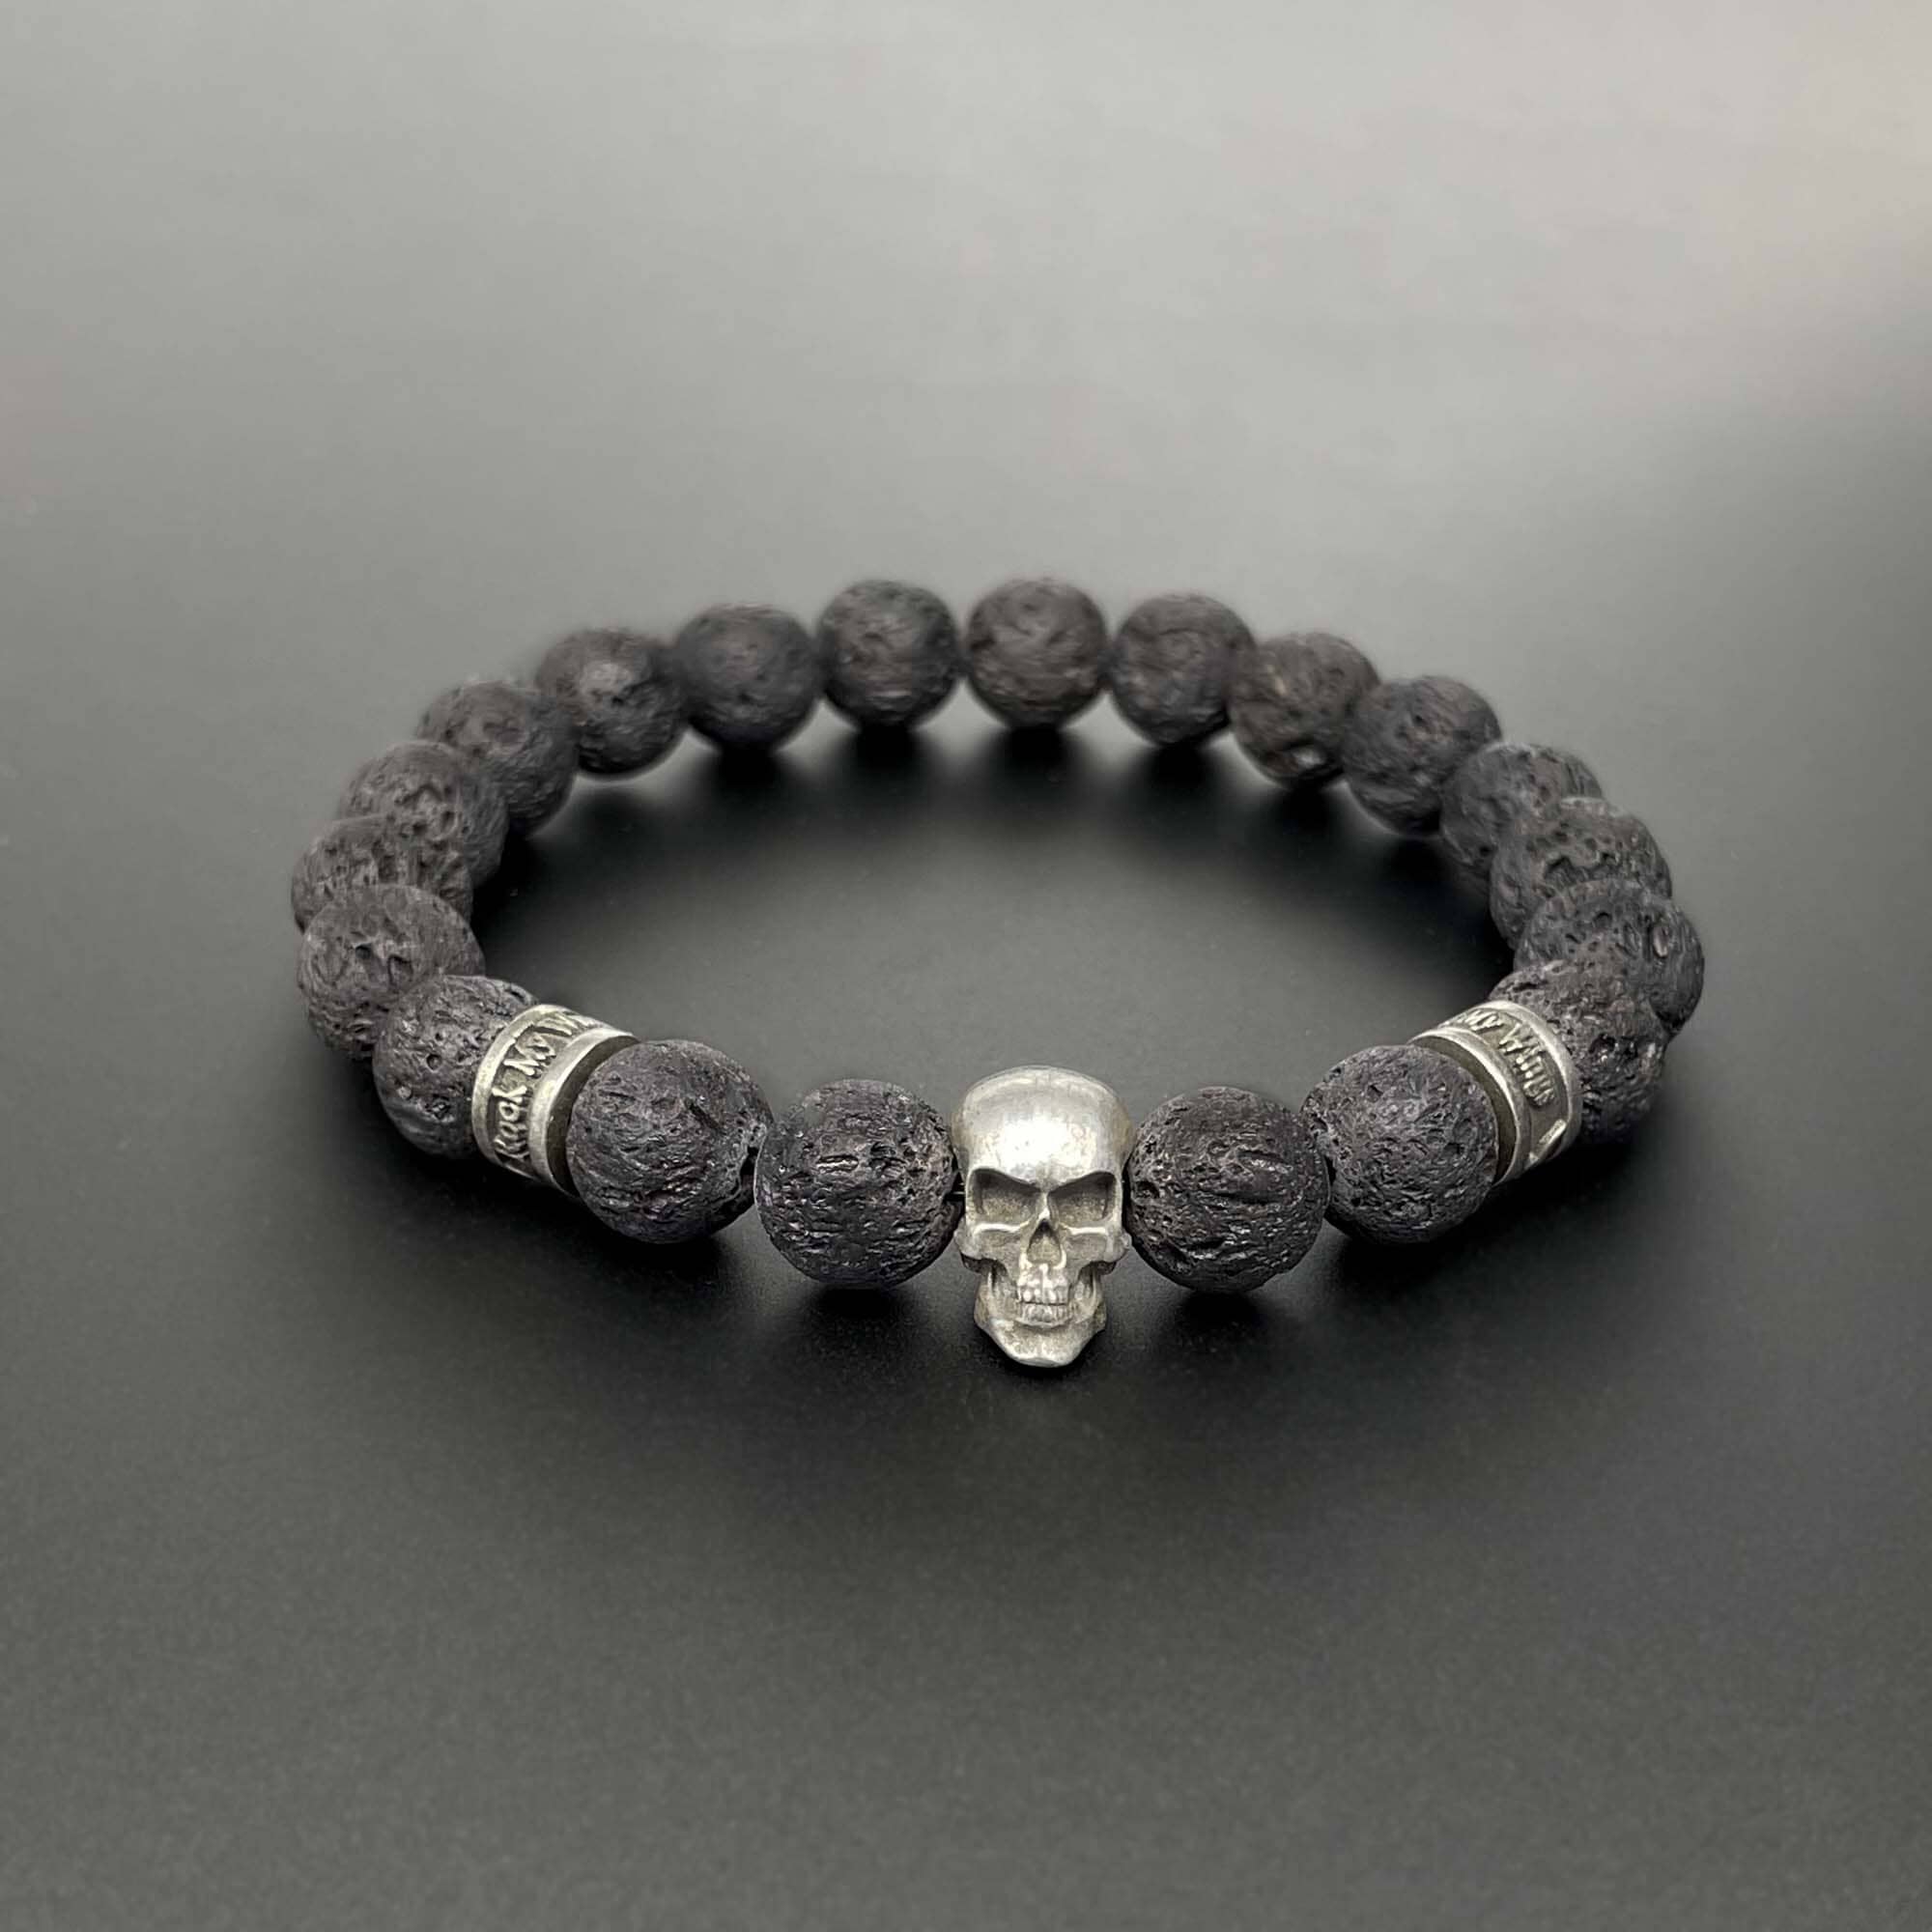 Large black skull bead bracelet for men by Rock My Wings